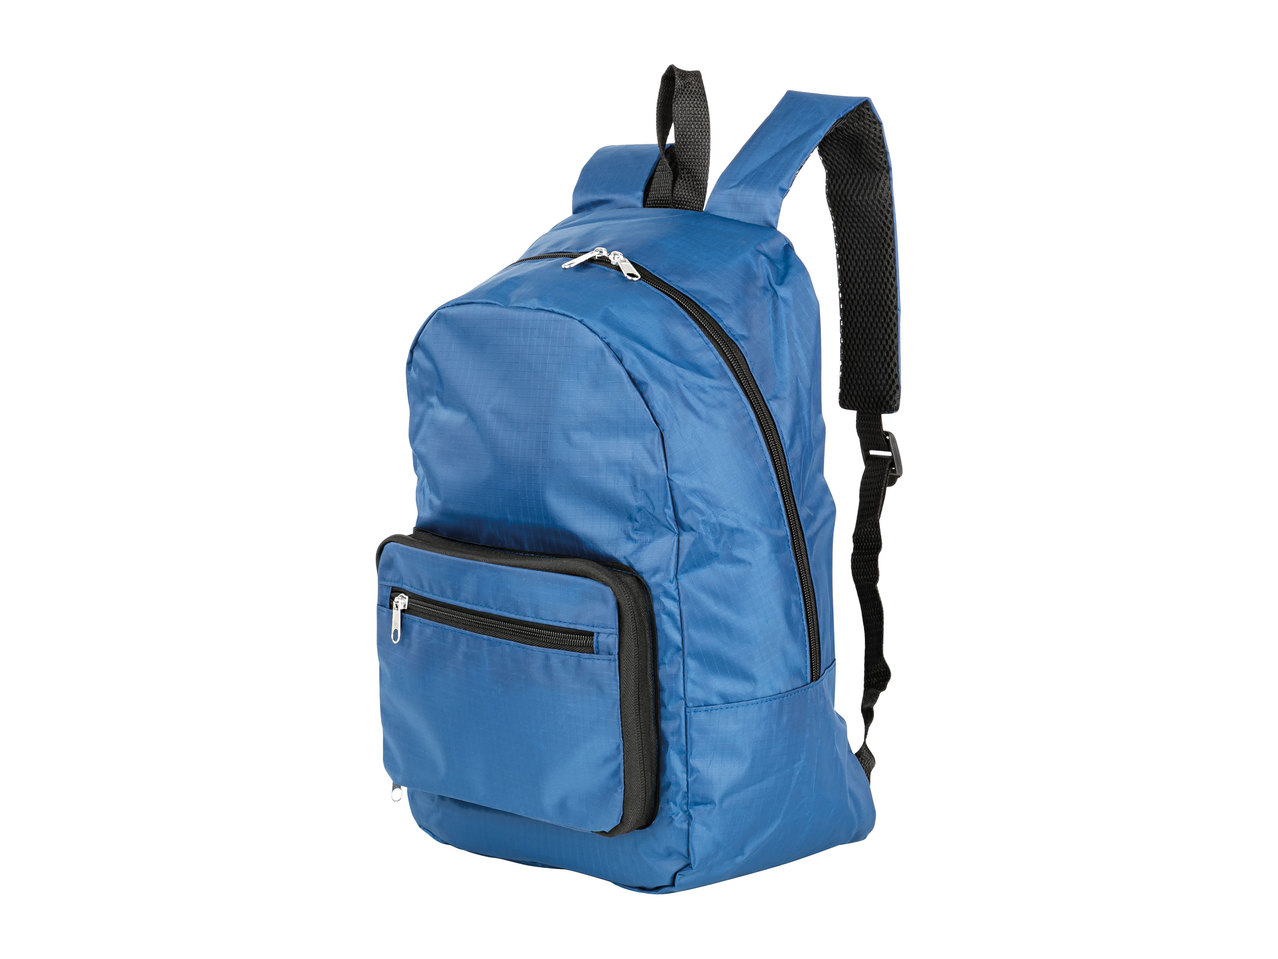 Top Move Foldable Backpack or Handbag1